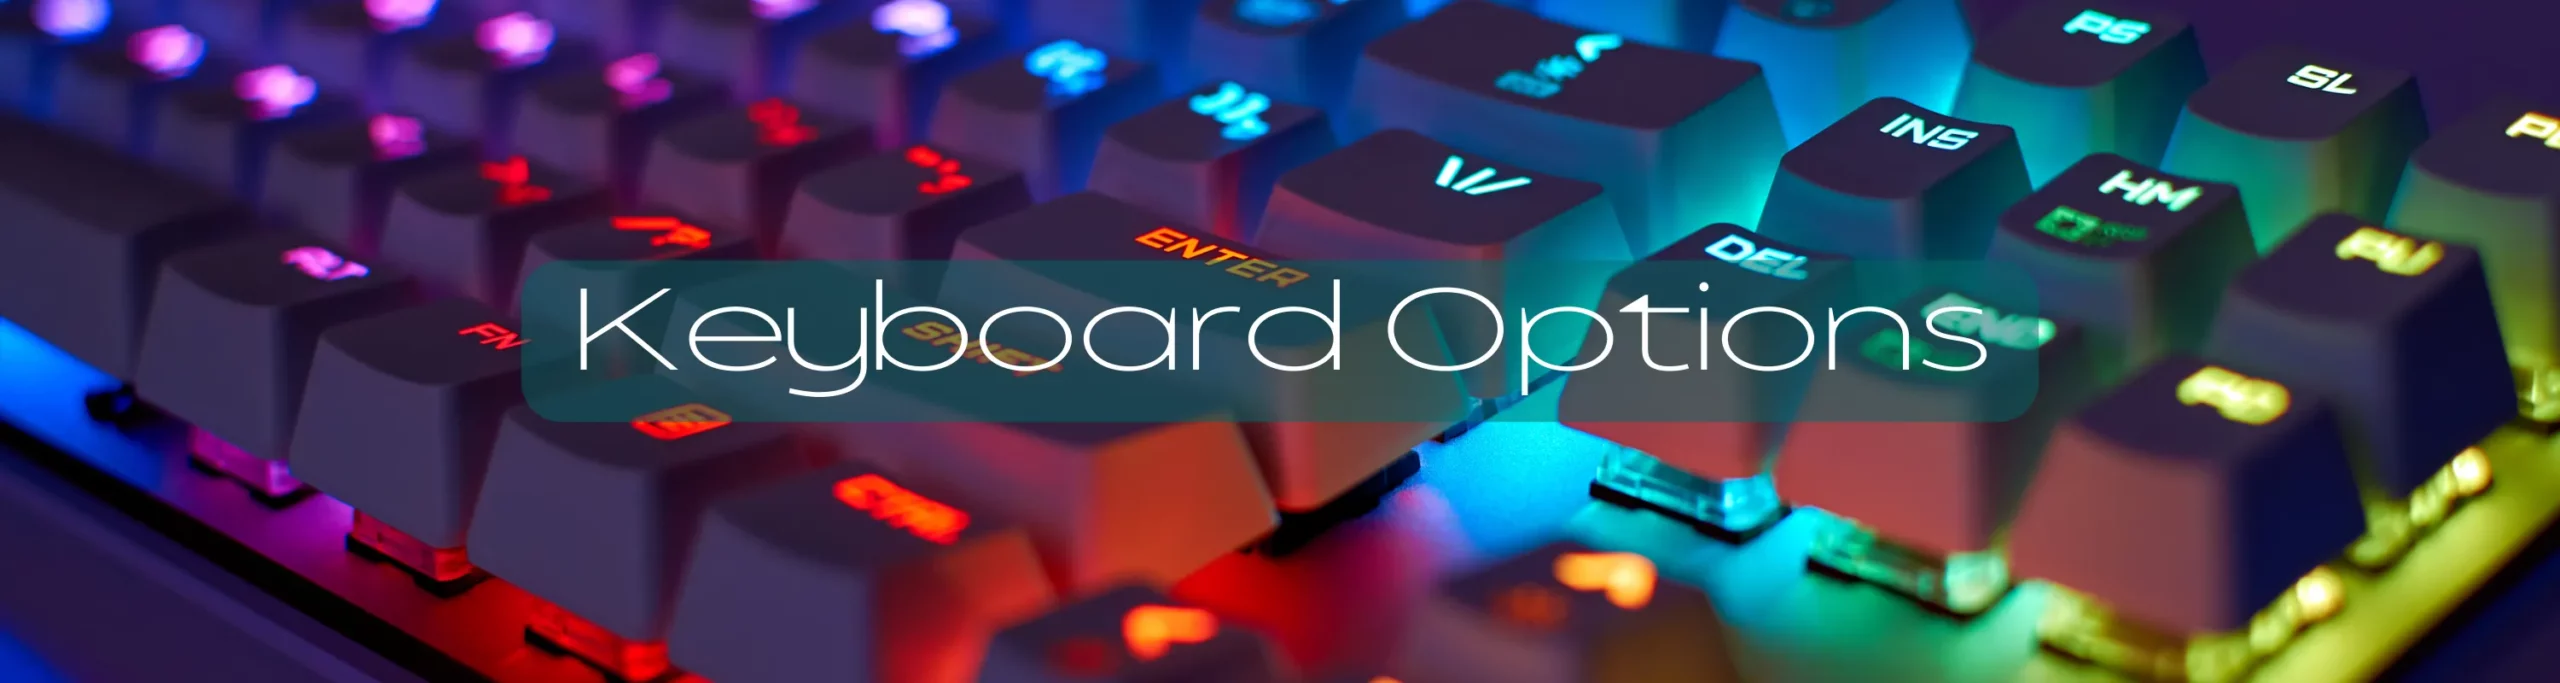 Keyboarding Options Banner